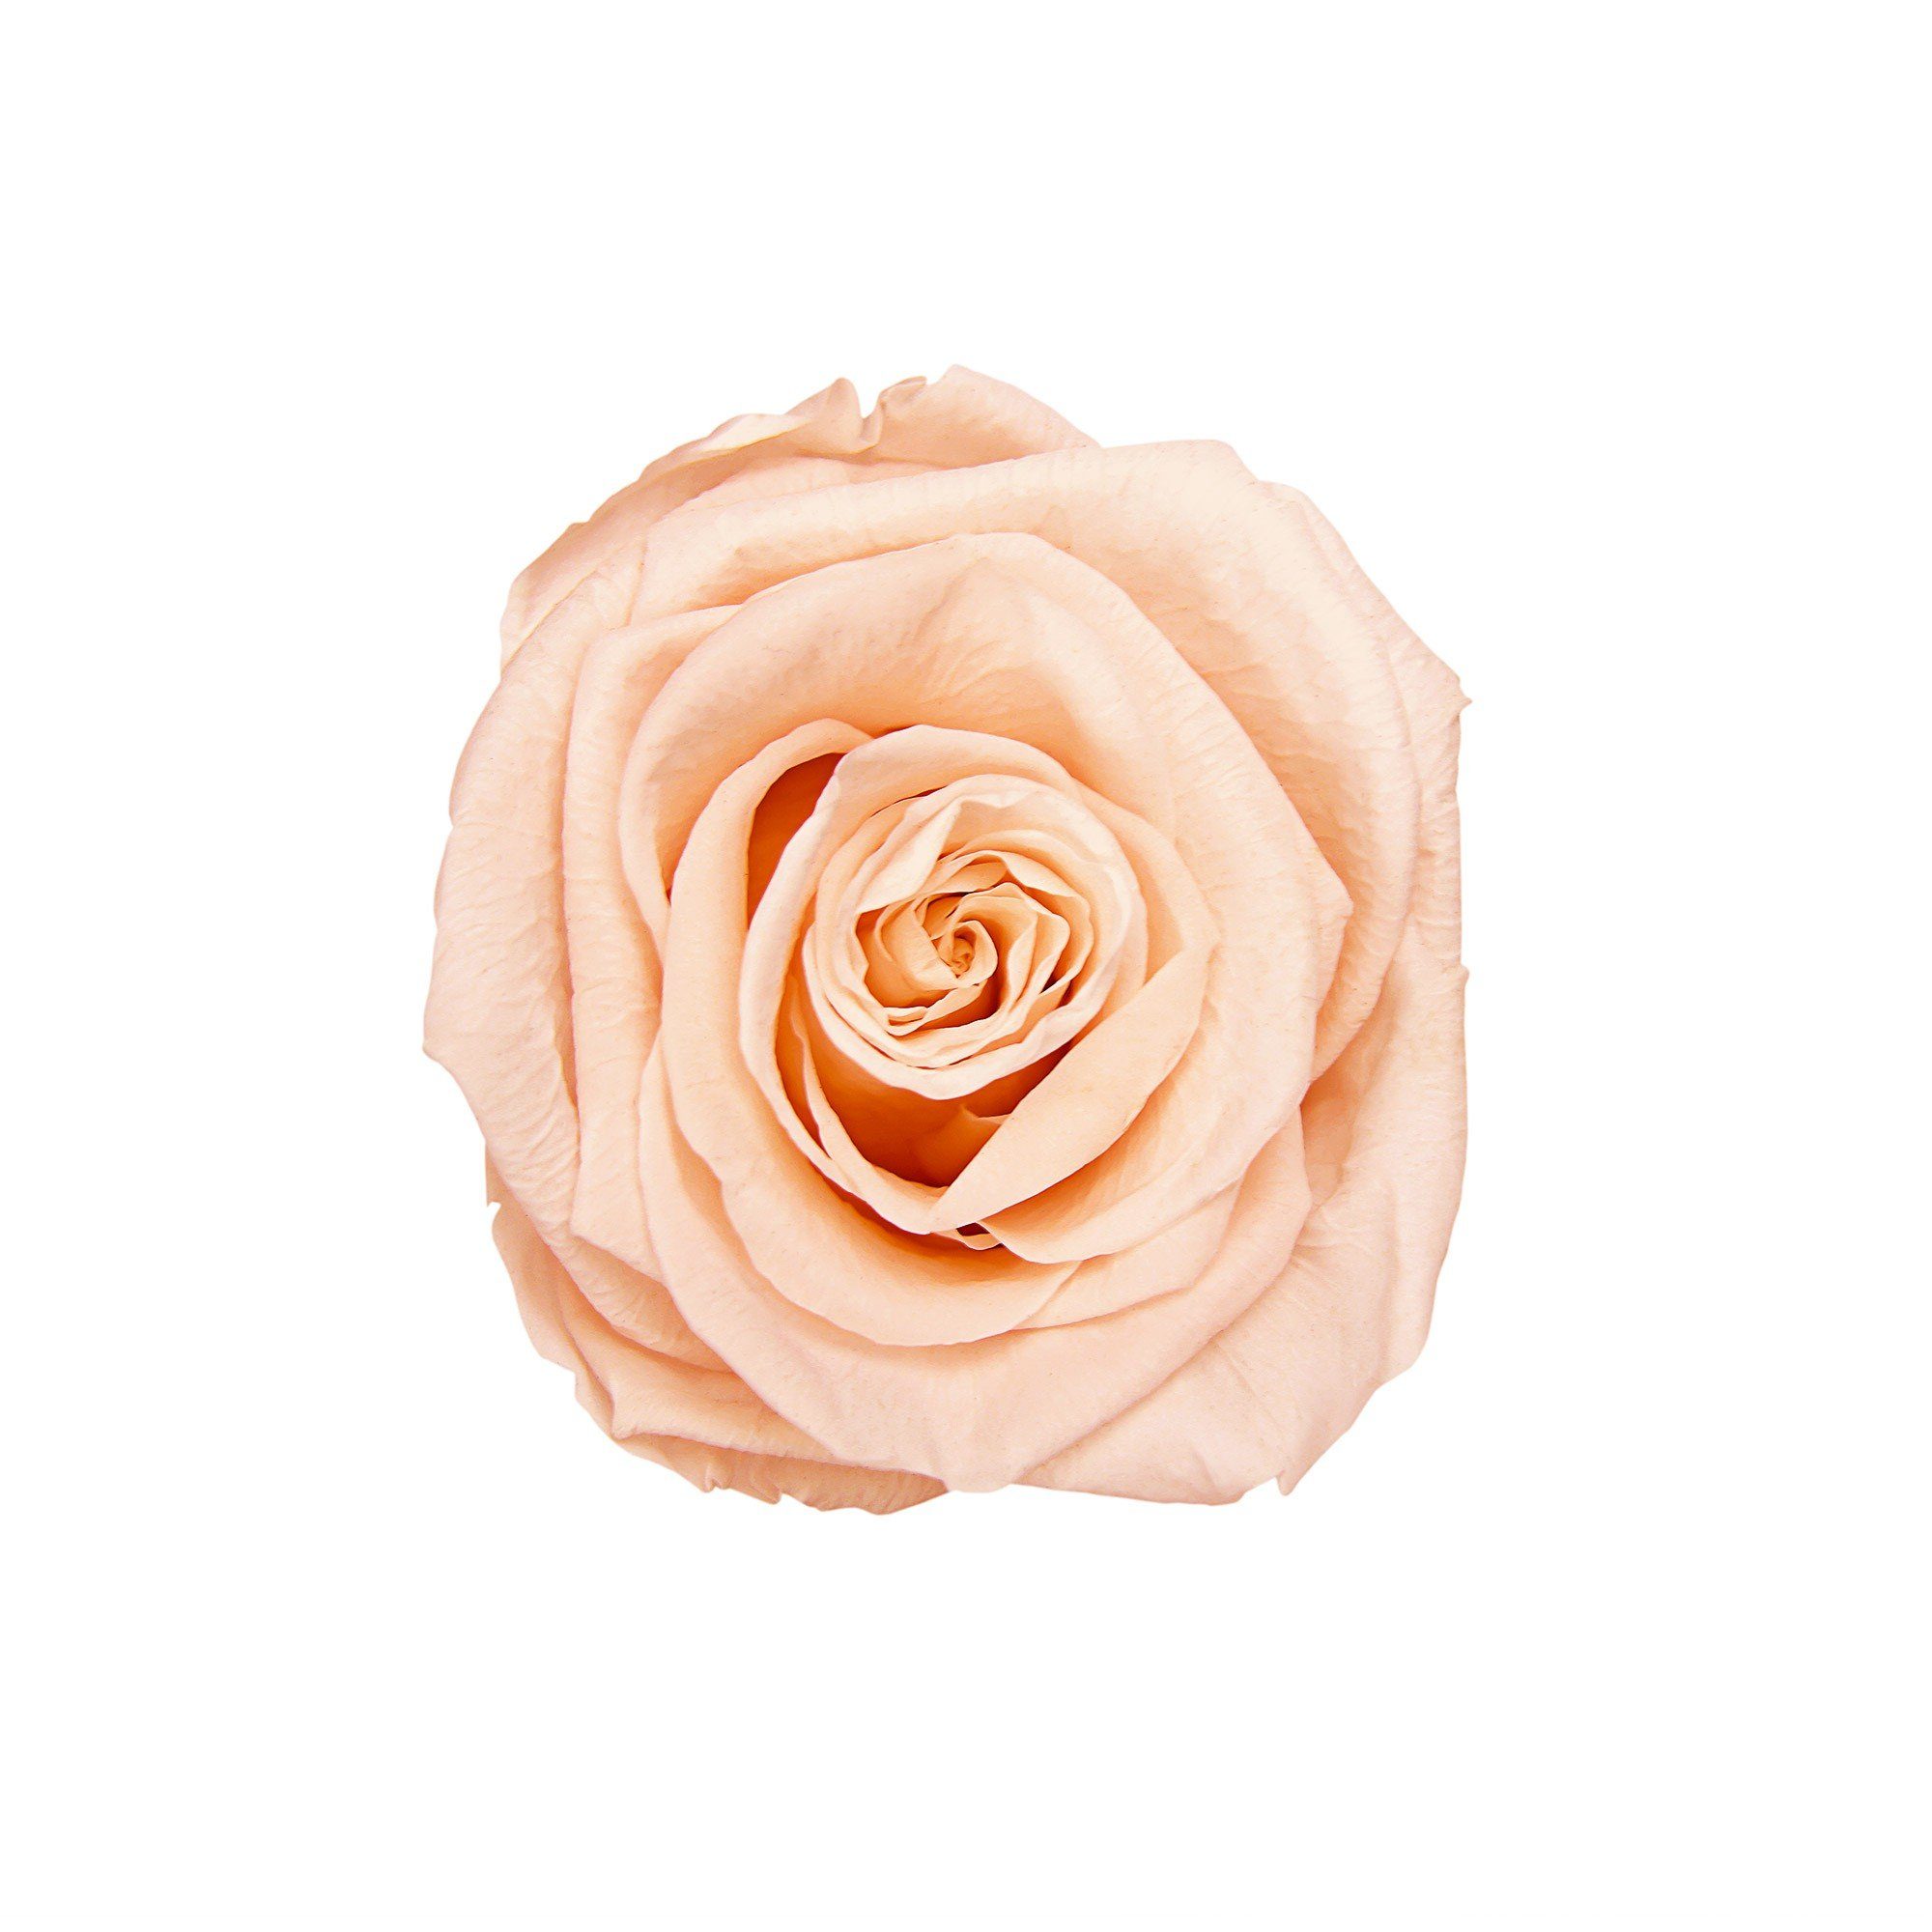 I konservierte by weiß 1er Rosenbox cm Infinity Höhe Holy Peach I Infinity Kunstblume Raul Flowers, Rose, Richter Rose 9 mit haltbar Echte, Blumen I Eckige in Jahre duftende 3